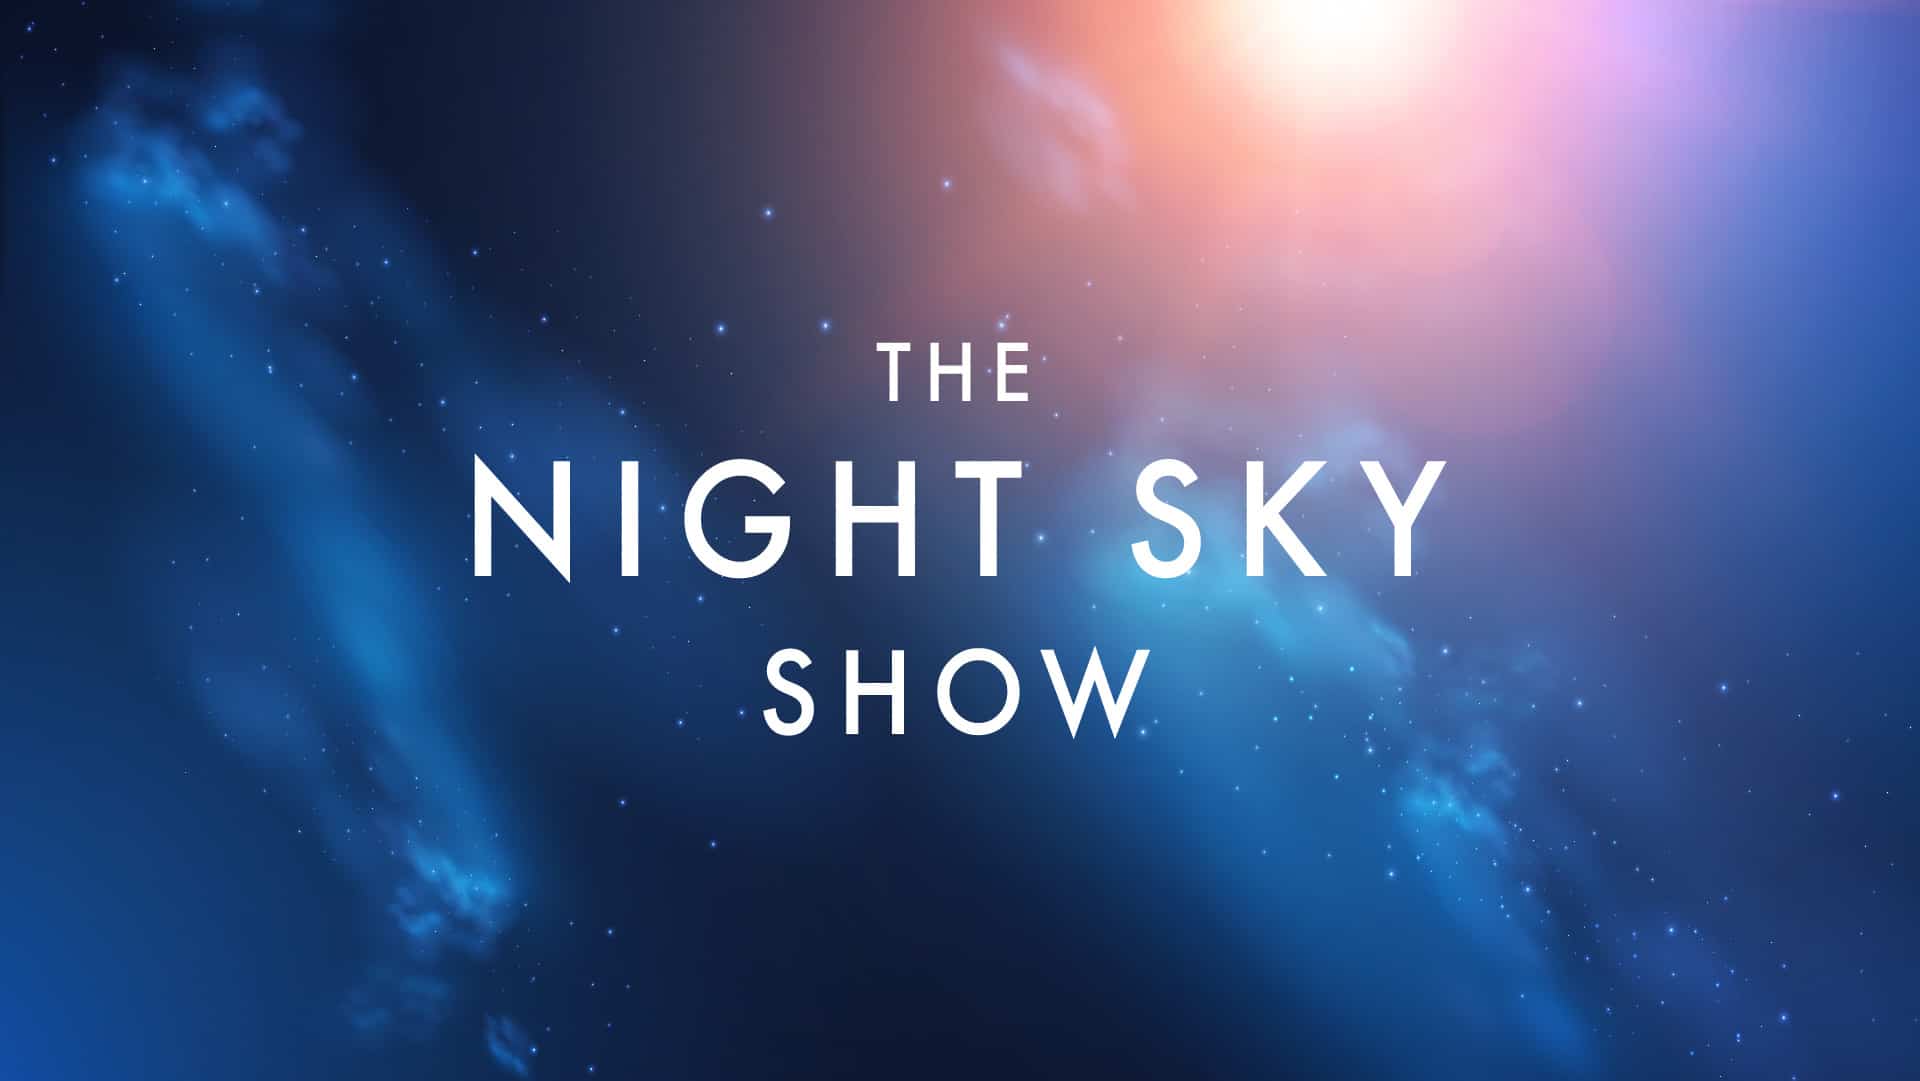 Lincoln, Night Sky Show, Isle of Wight, Quay Arts